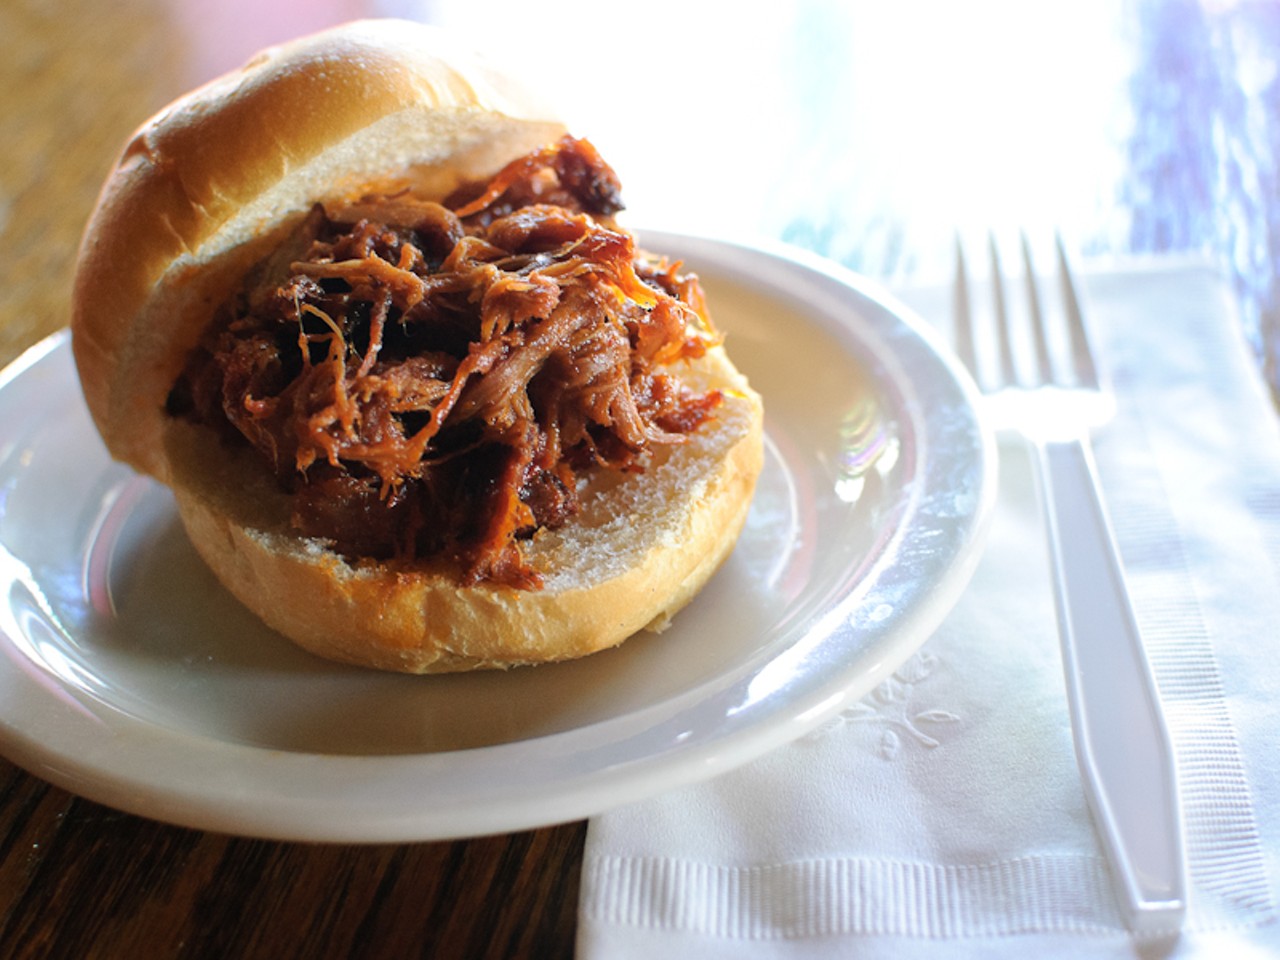 Gladstone's restaurant and bar slung a Cajun Pulled Pork Sandwich to their Taste of Soulard patrons.